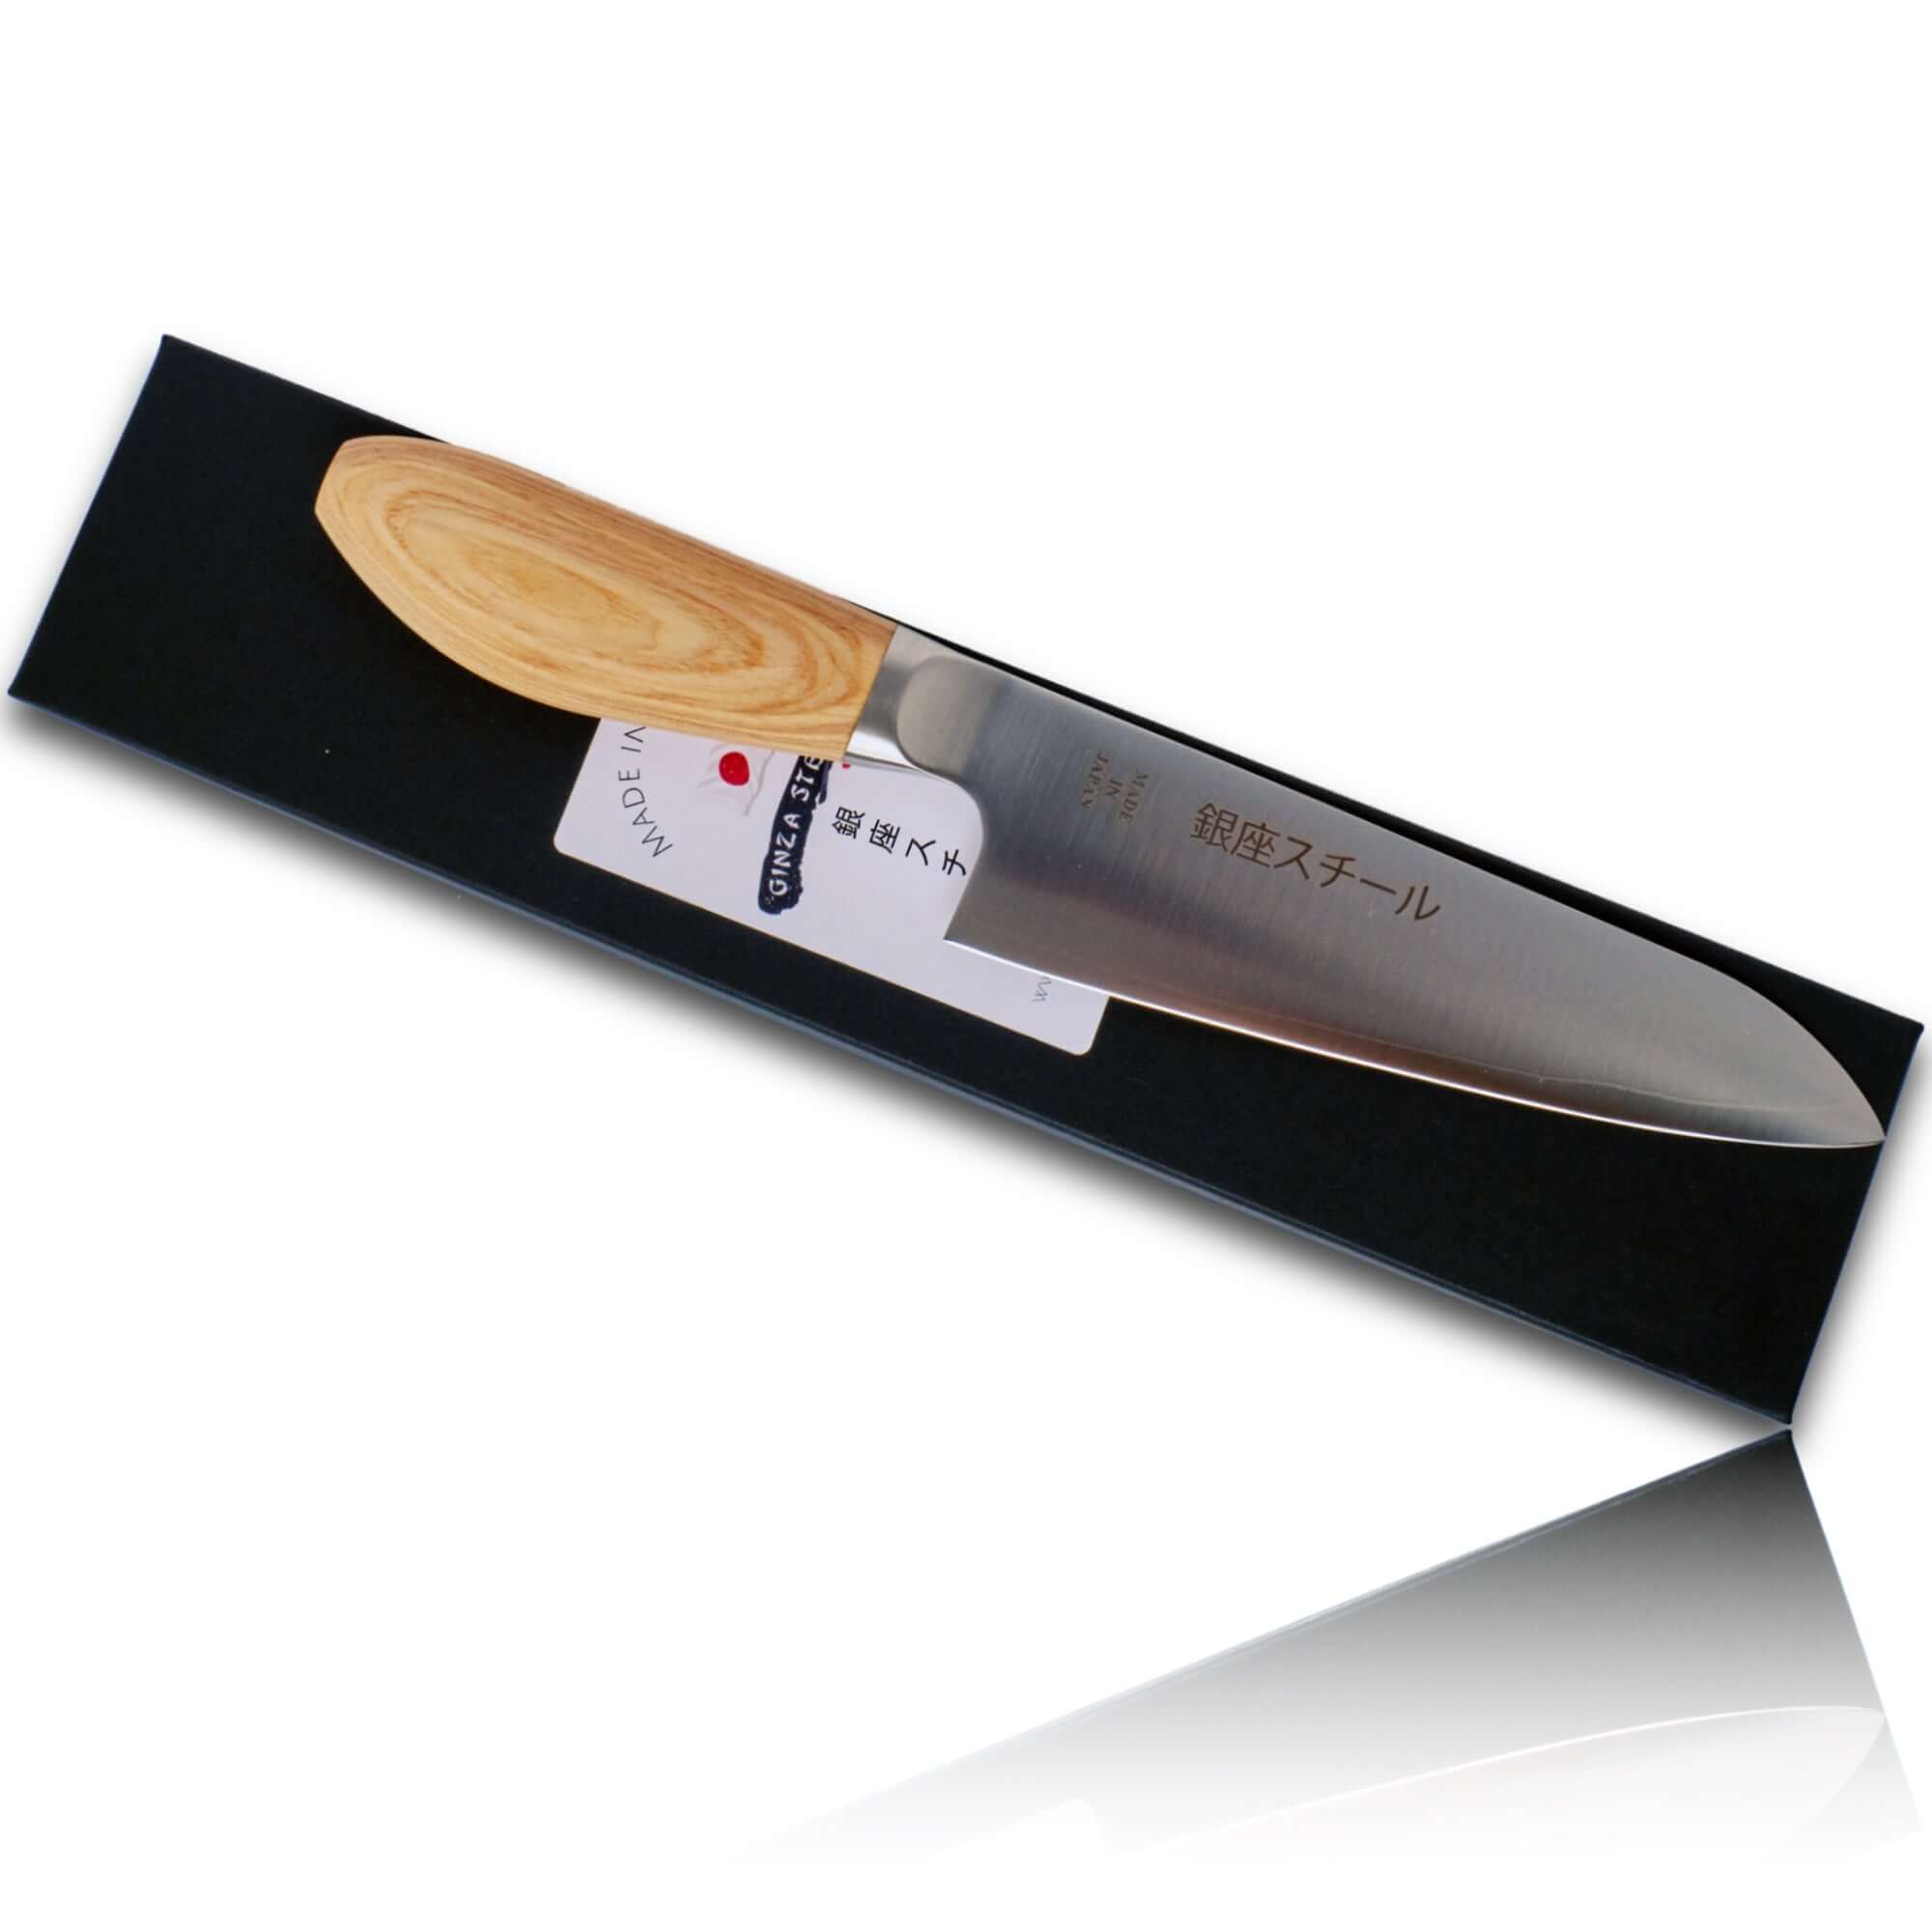 MATSUE 165 - MV Stainless Steel Santoku Knife 165mm/Natural Wood Handle